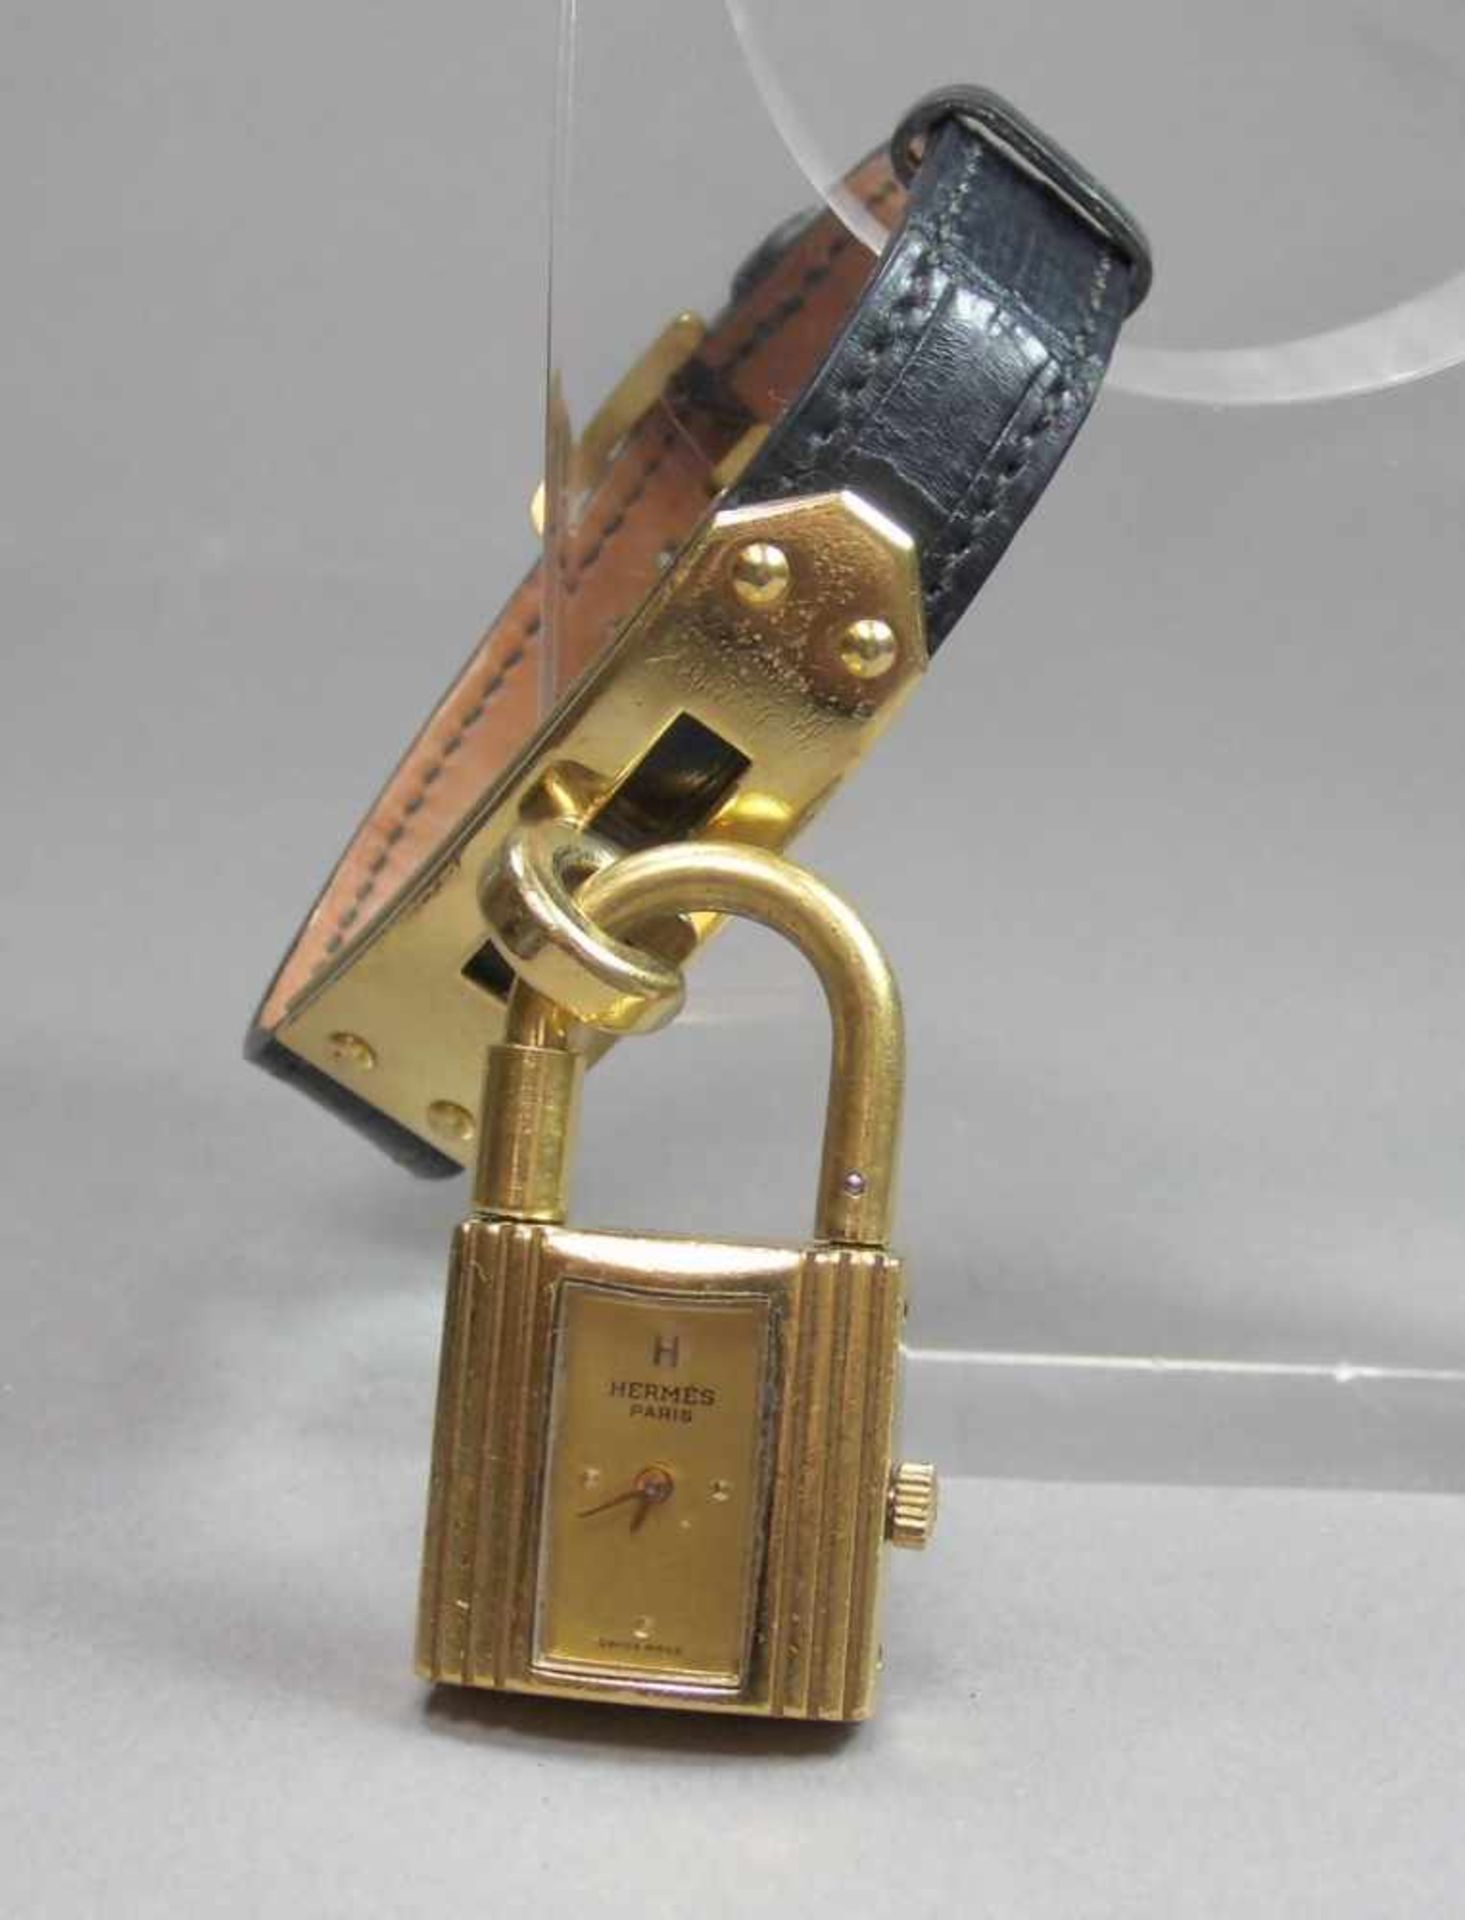 HERMES VINTAGE DAMEN-ARMBANDUHR "KELLY WATCH" / wristwatch, mit originalem Hermes Lederarmband.